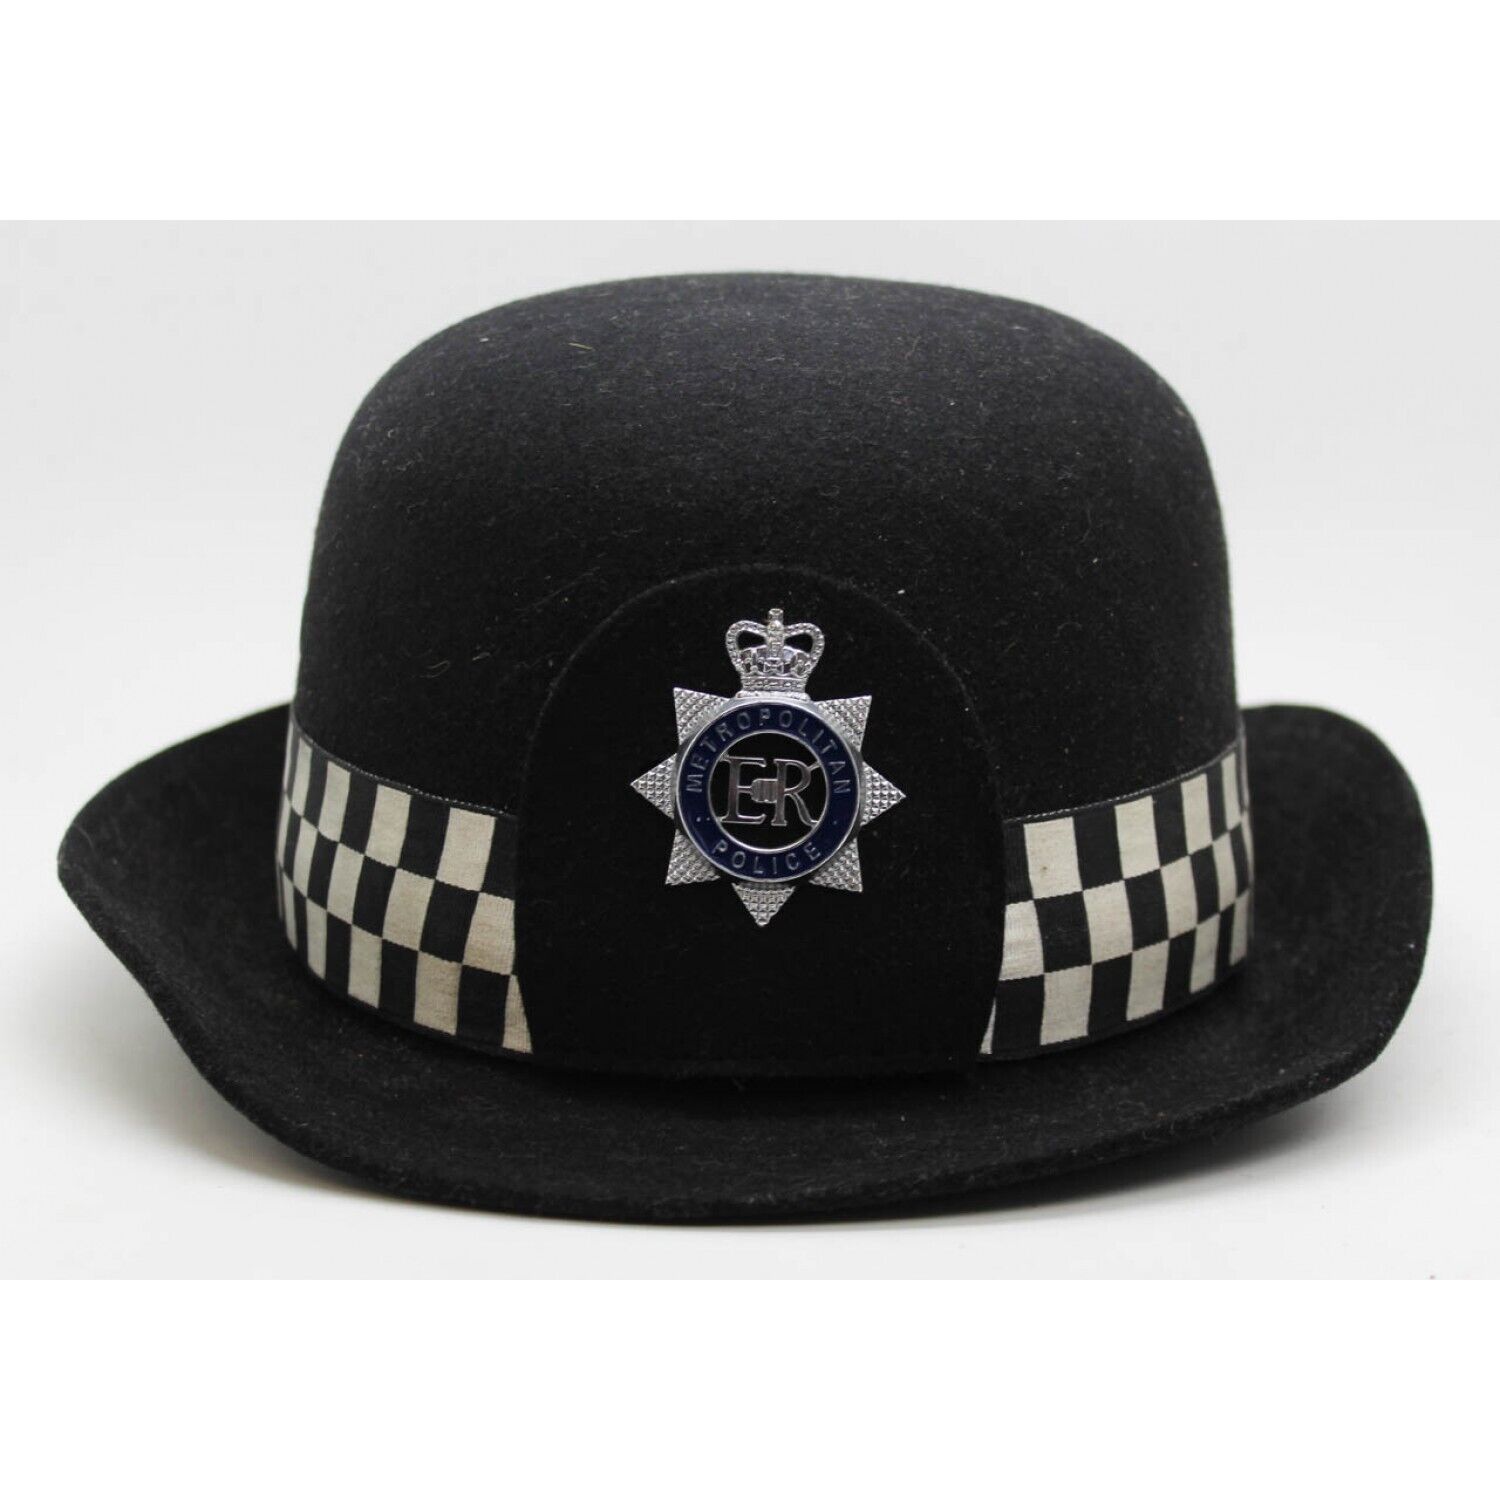 New Obsolete Superb British METROPOLITAN POLICE Female (WPC) Bowler Black hat